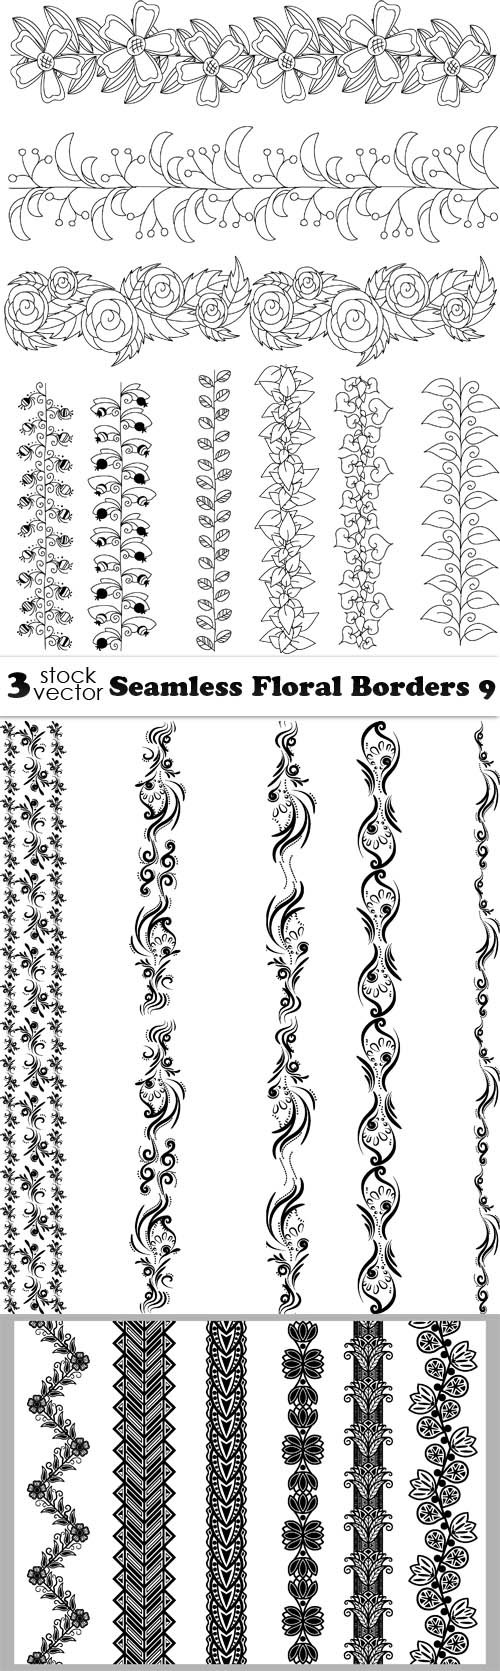 Vectors - Seamless Floral Borders 9